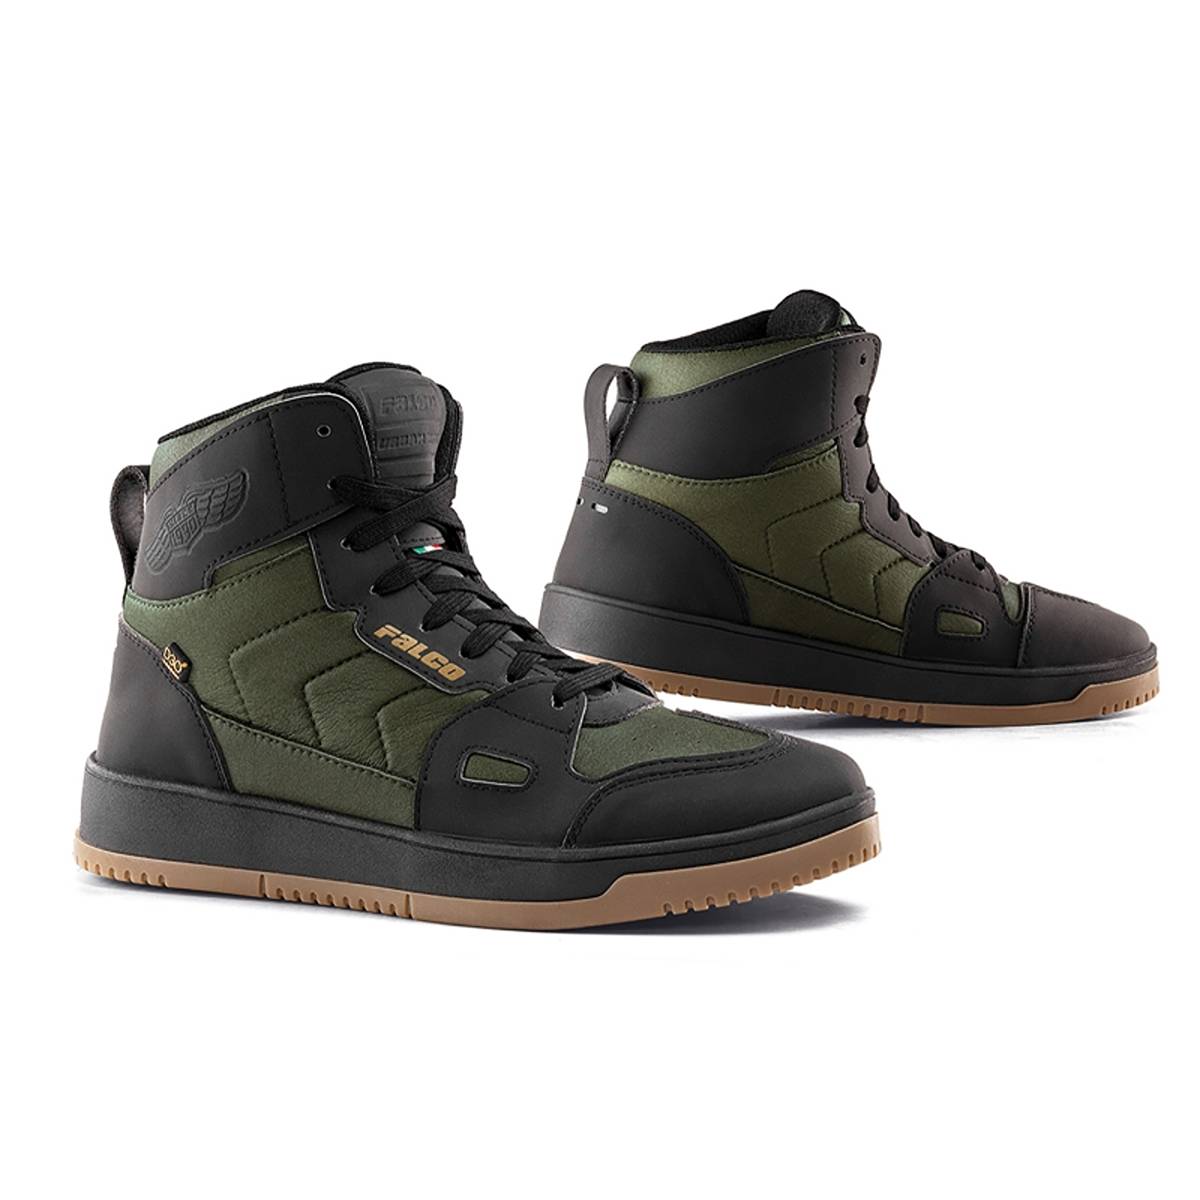 Falco Harlem Shoes Black Green Size 39